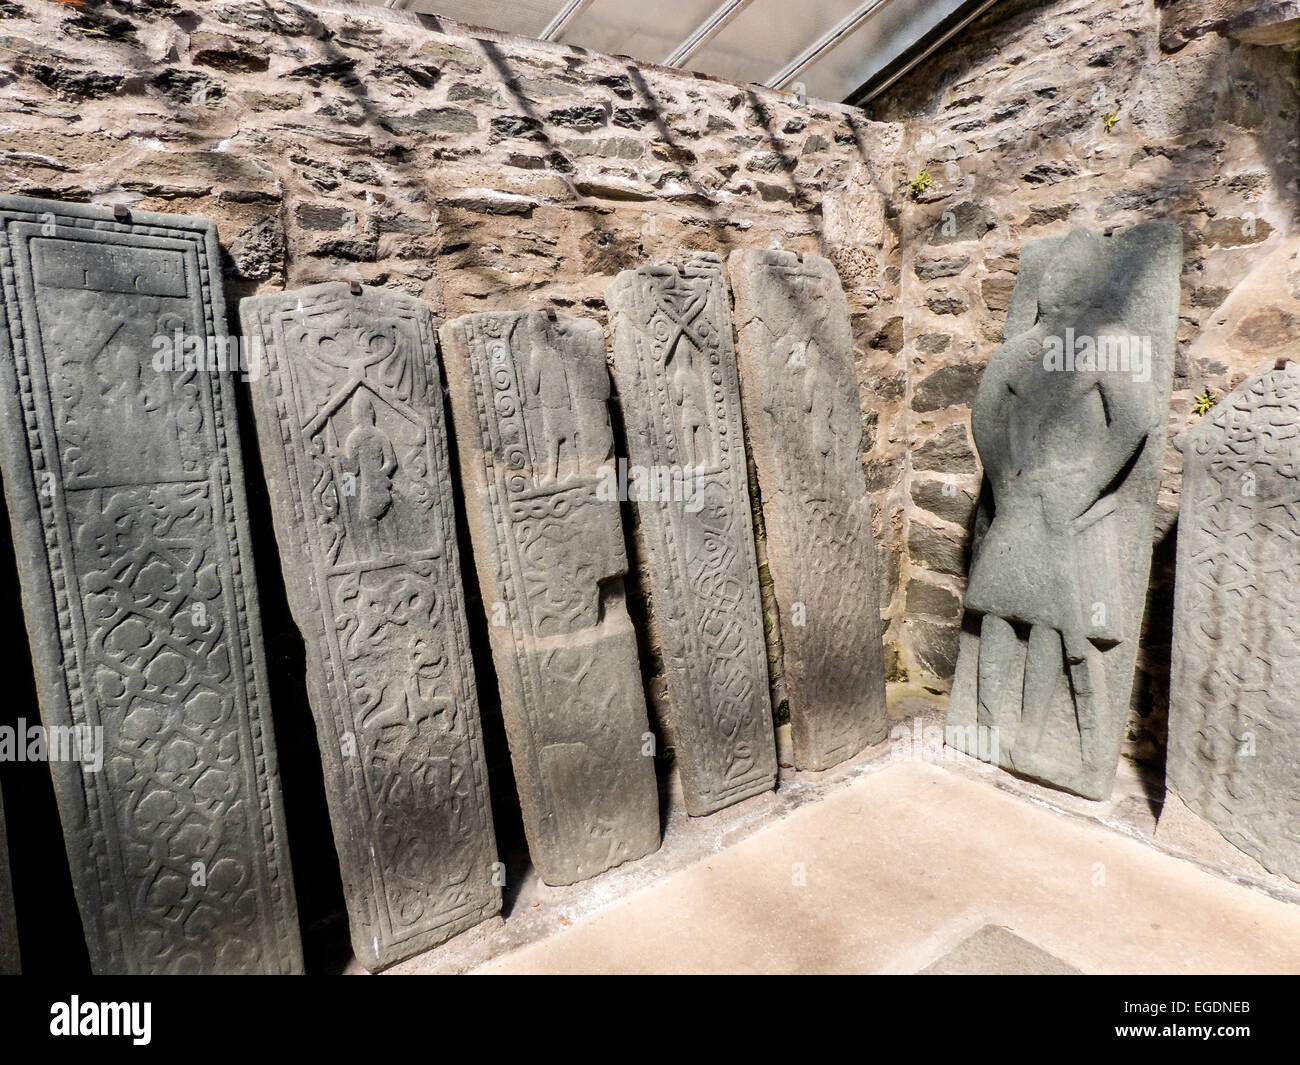 The Kilmartin Stones are a collection of ancient graveslabs at Kilmartin parish church in the village of Kilmartin, Argyll, Scot Stock Photo